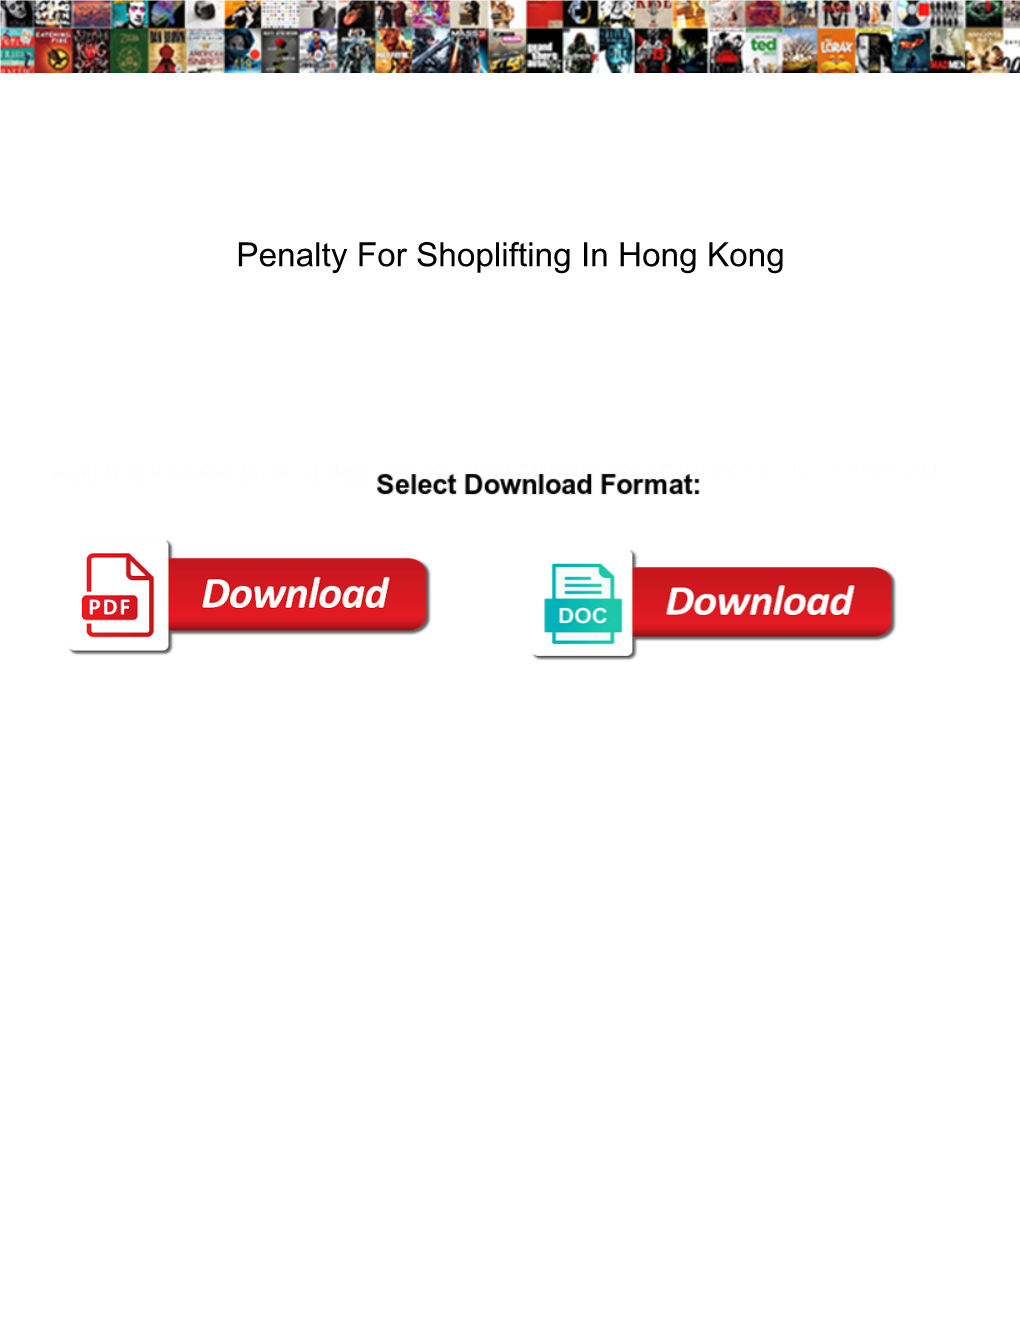 Penalty for Shoplifting in Hong Kong